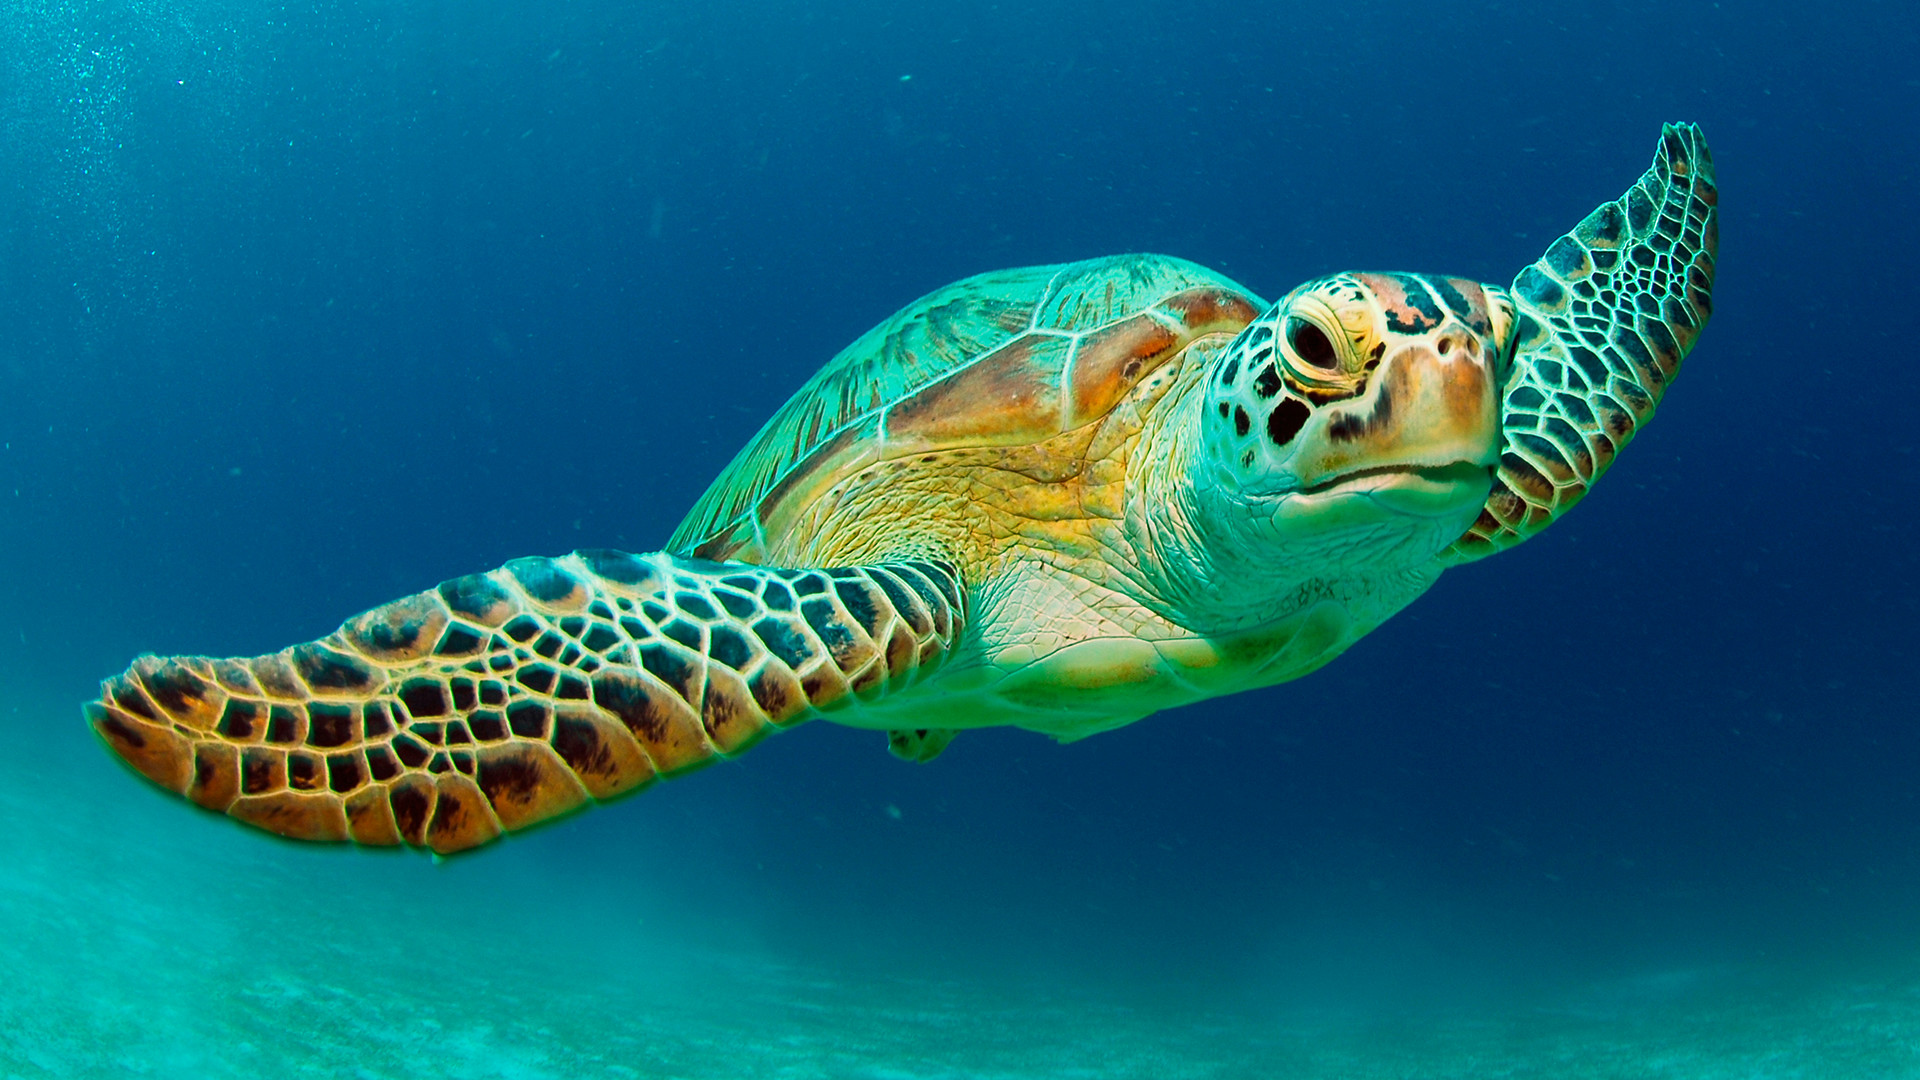 Cyprus’s endangered green sea turtles #WorldTurtleDay